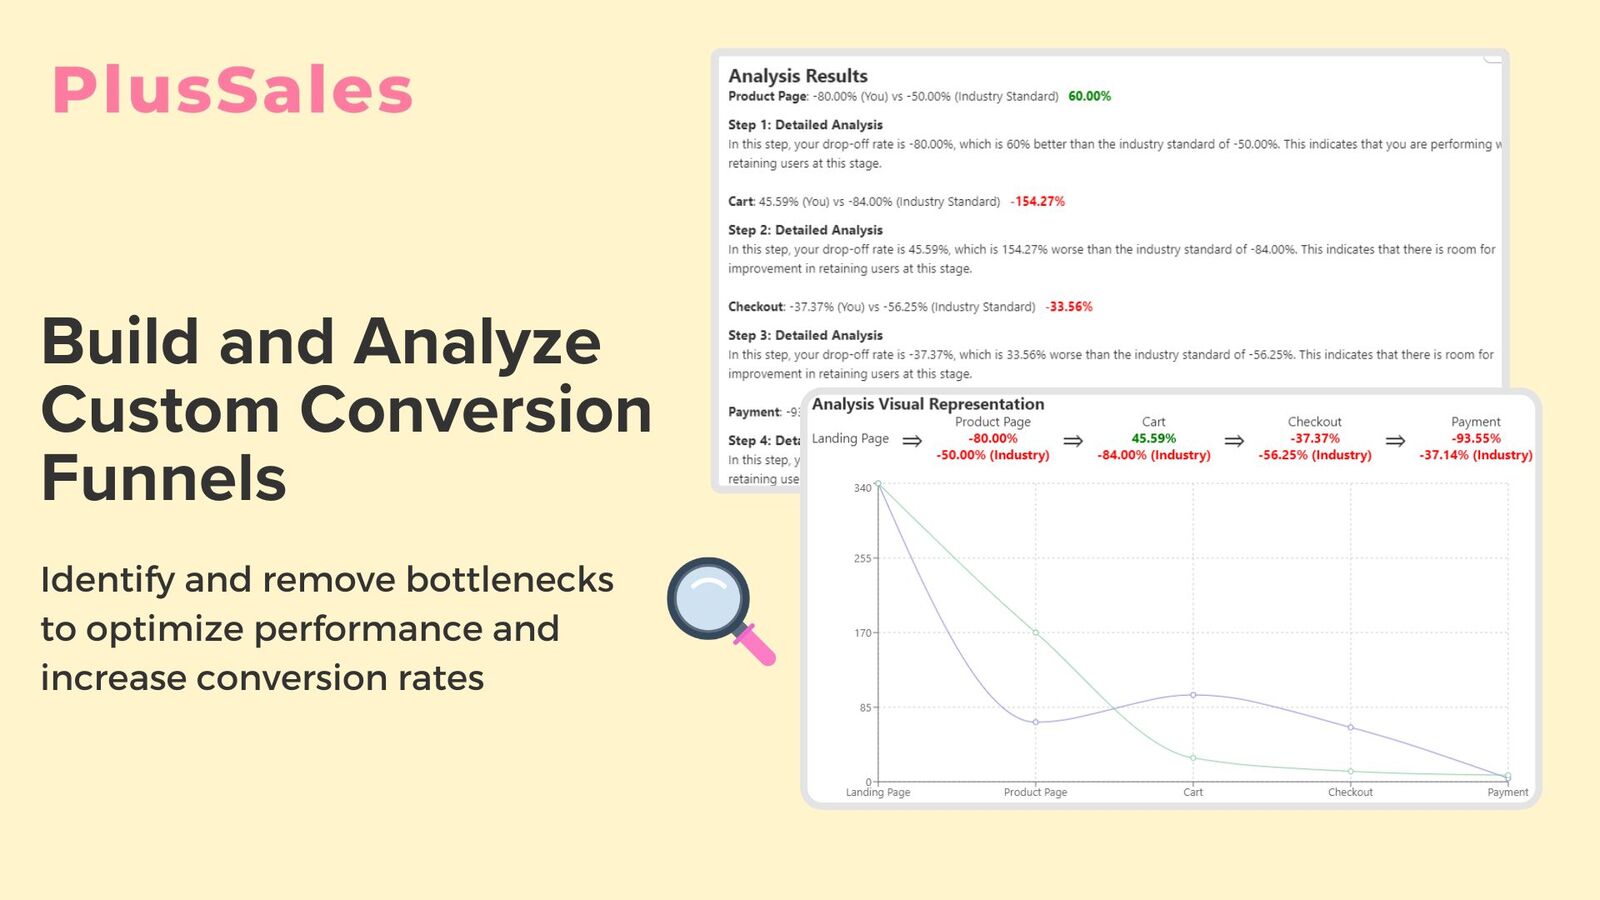 analyze your own conversion funnels & identify & fix bottlenecks